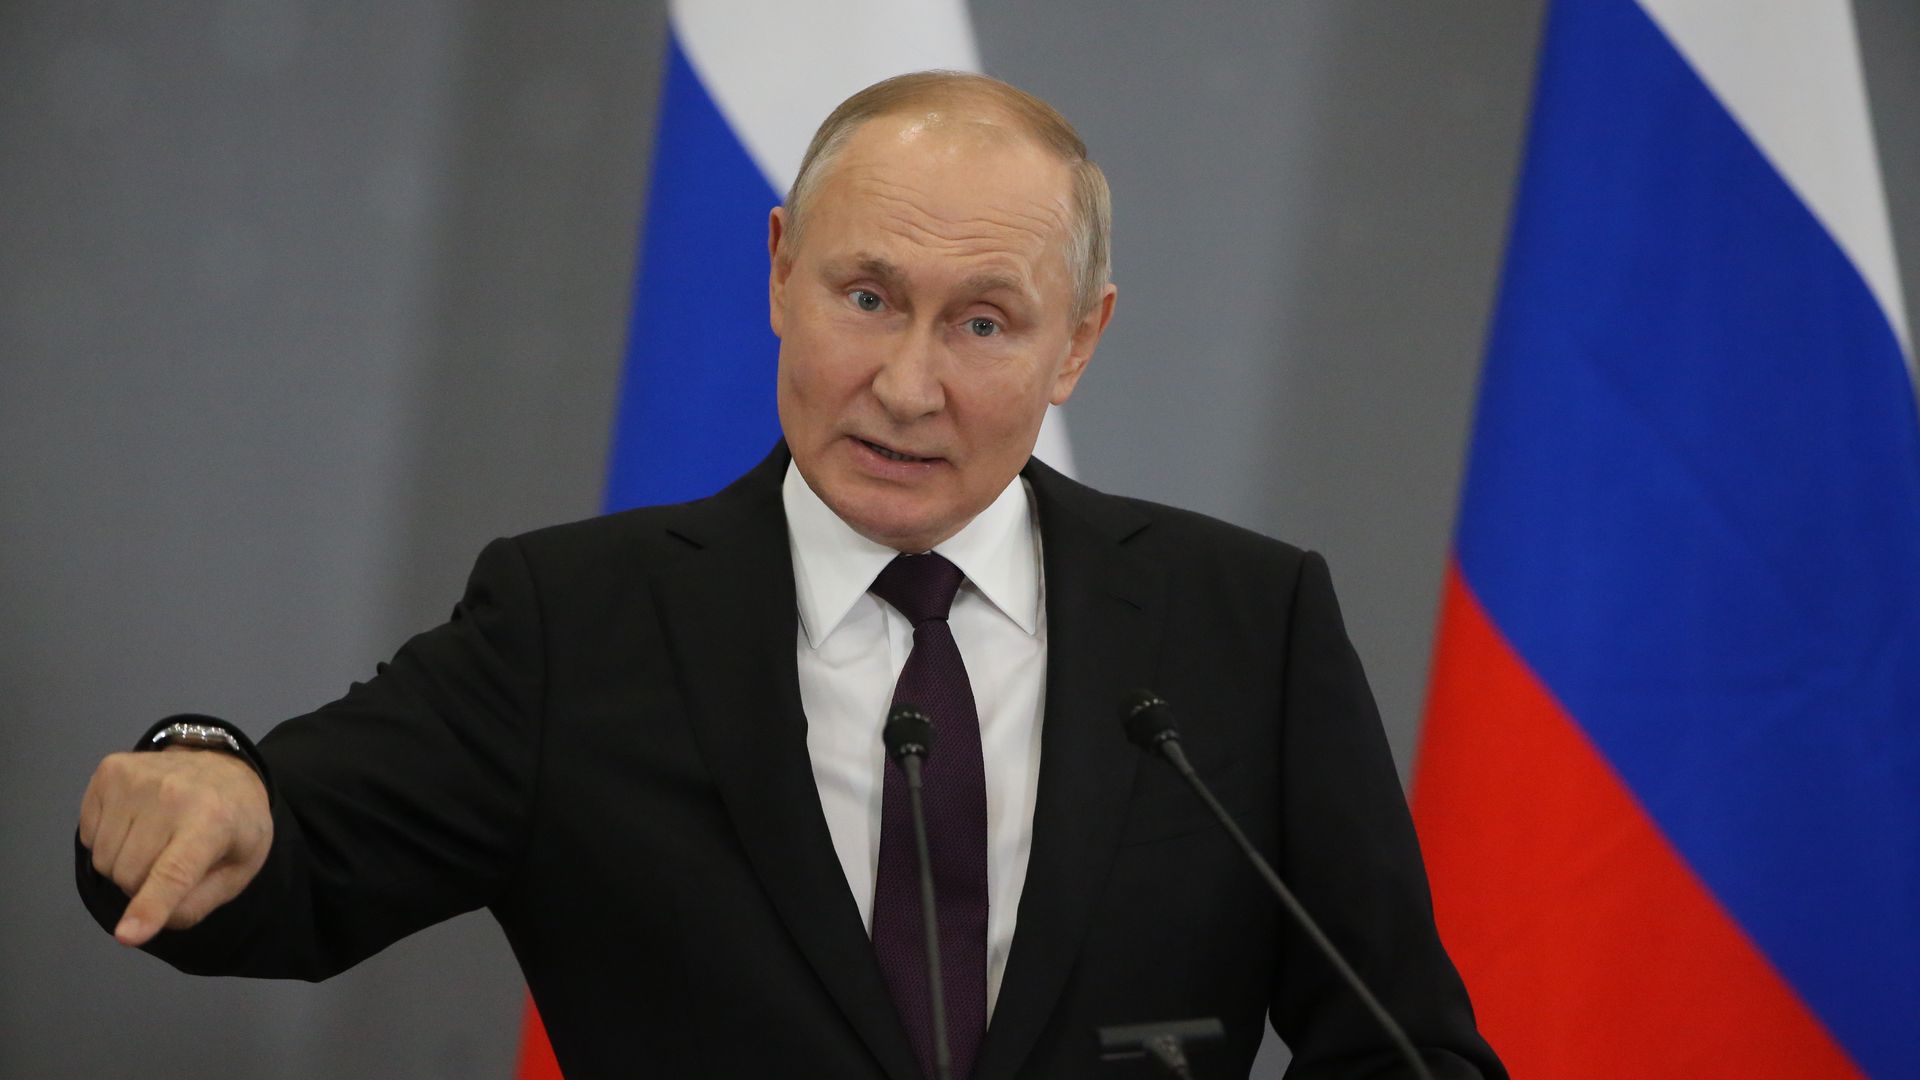 Russian President Vladimir Putin speaks during his press conference